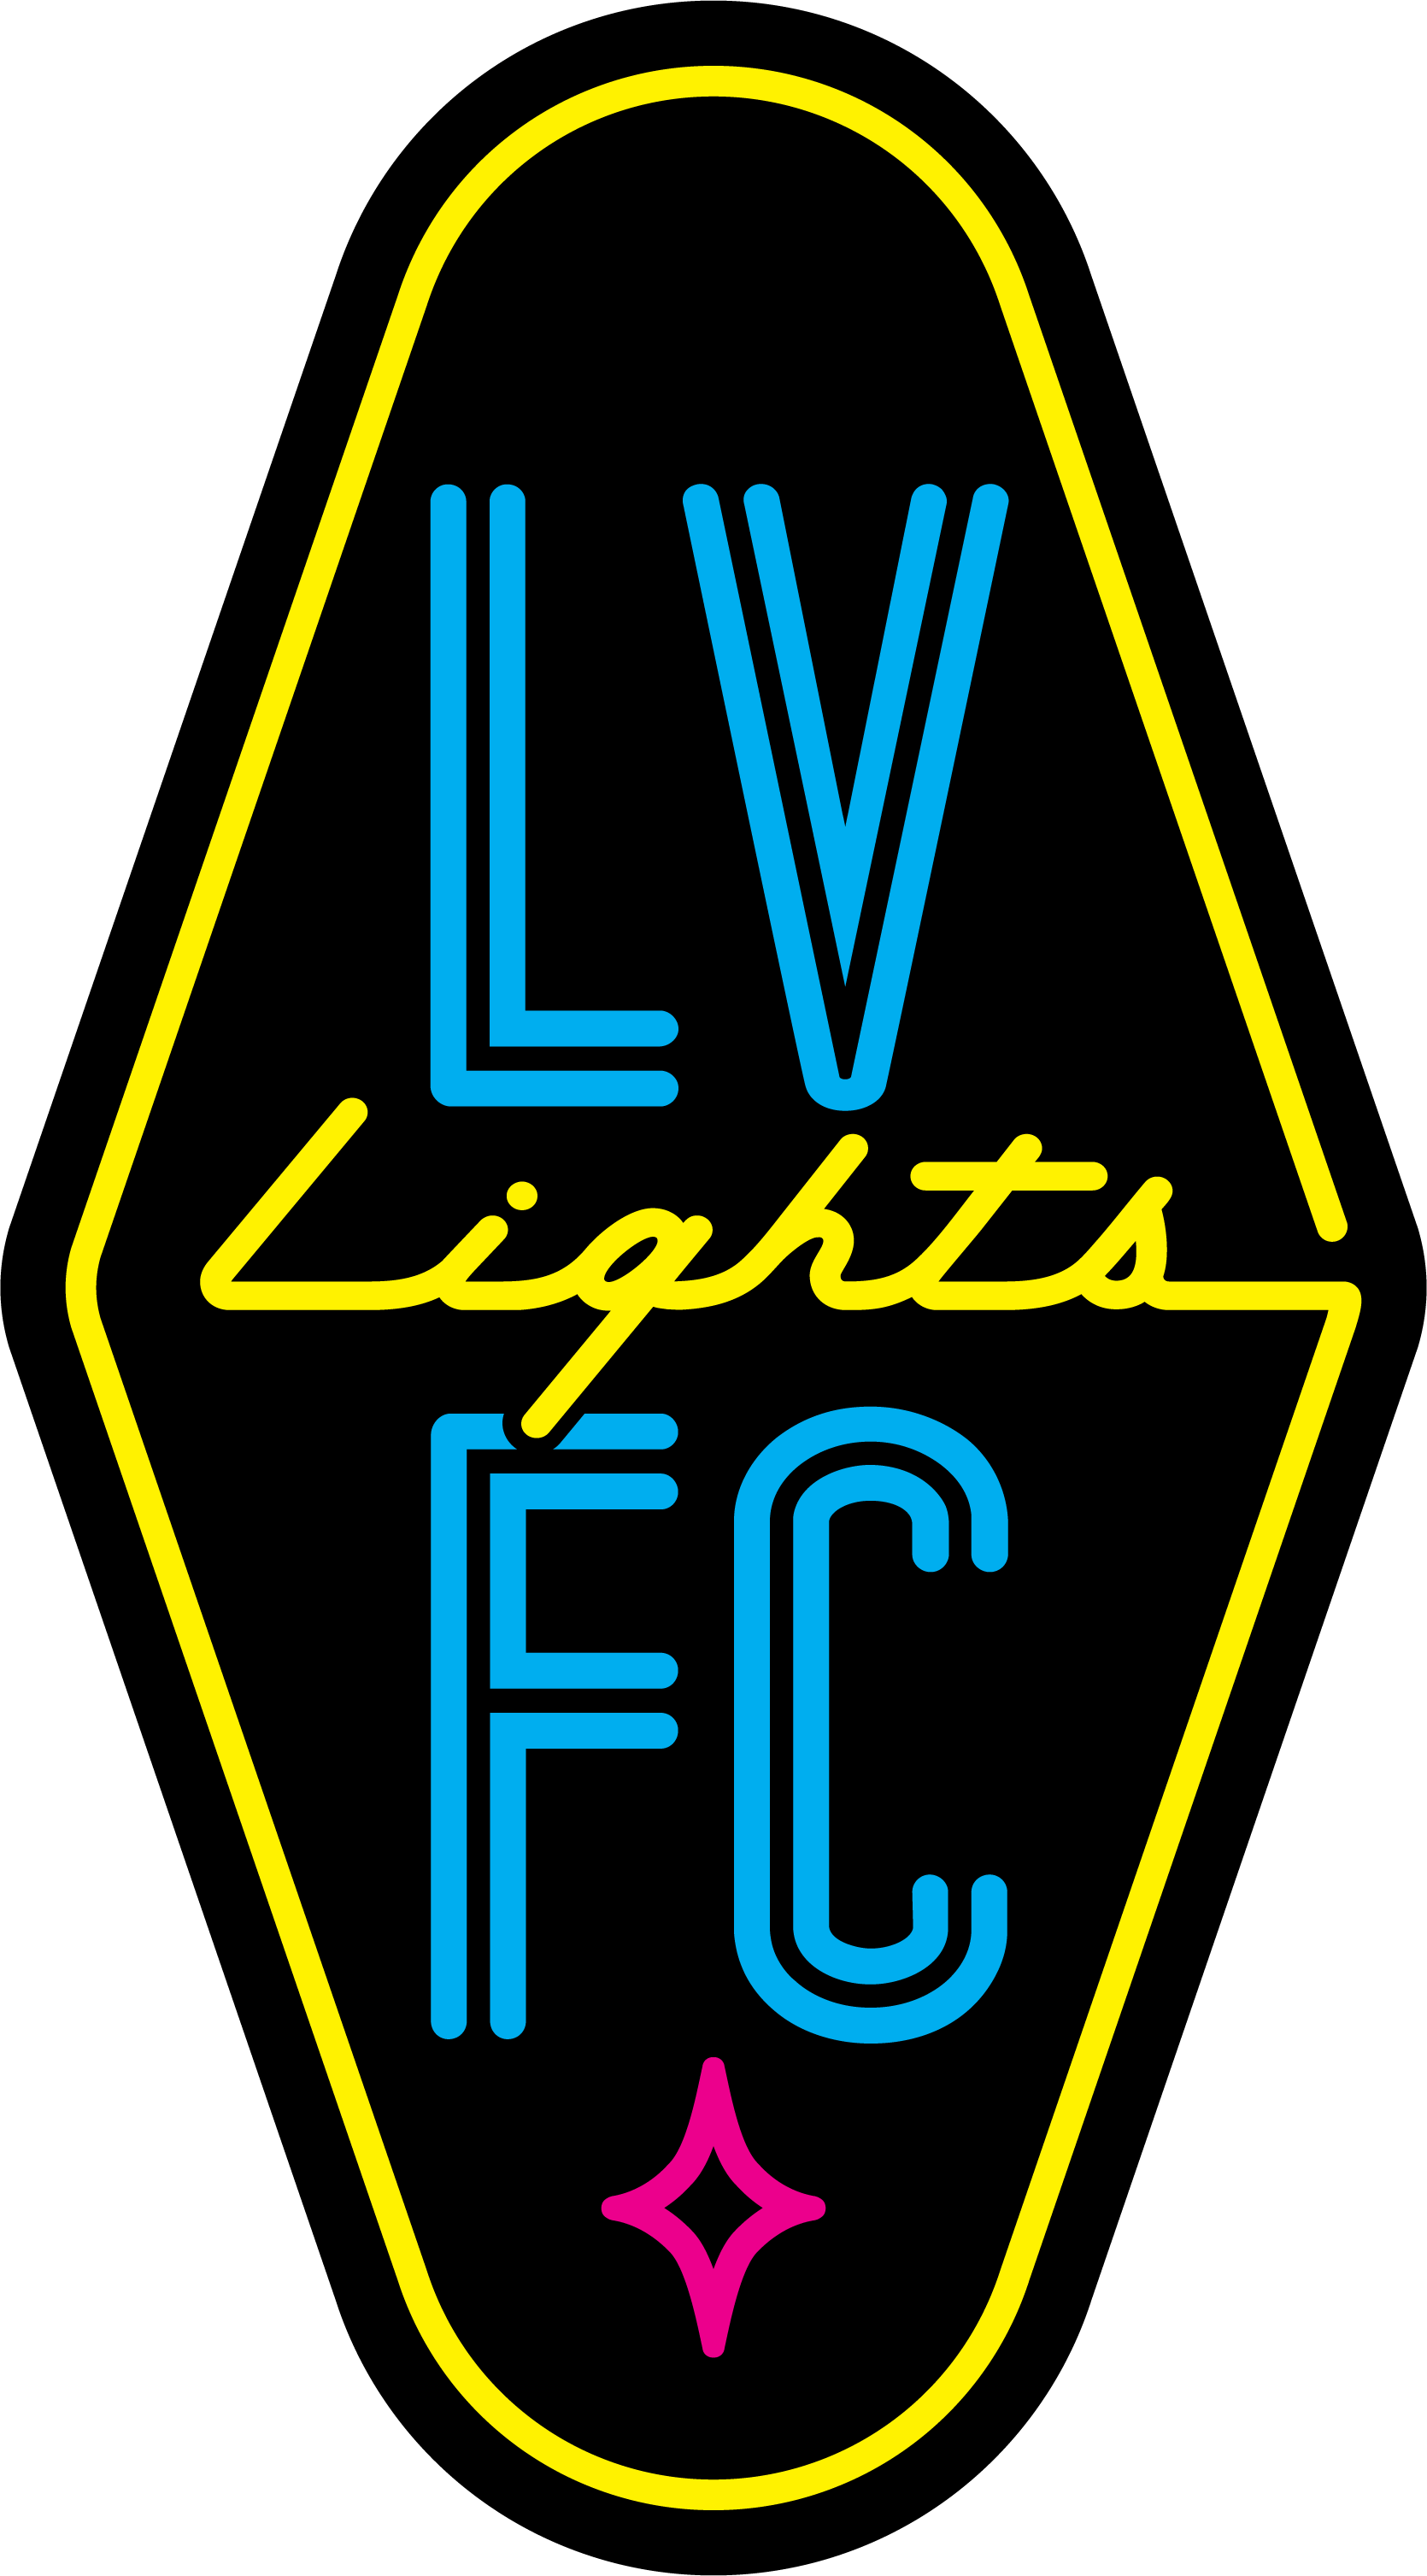 Las Vegas Lights FC Logo